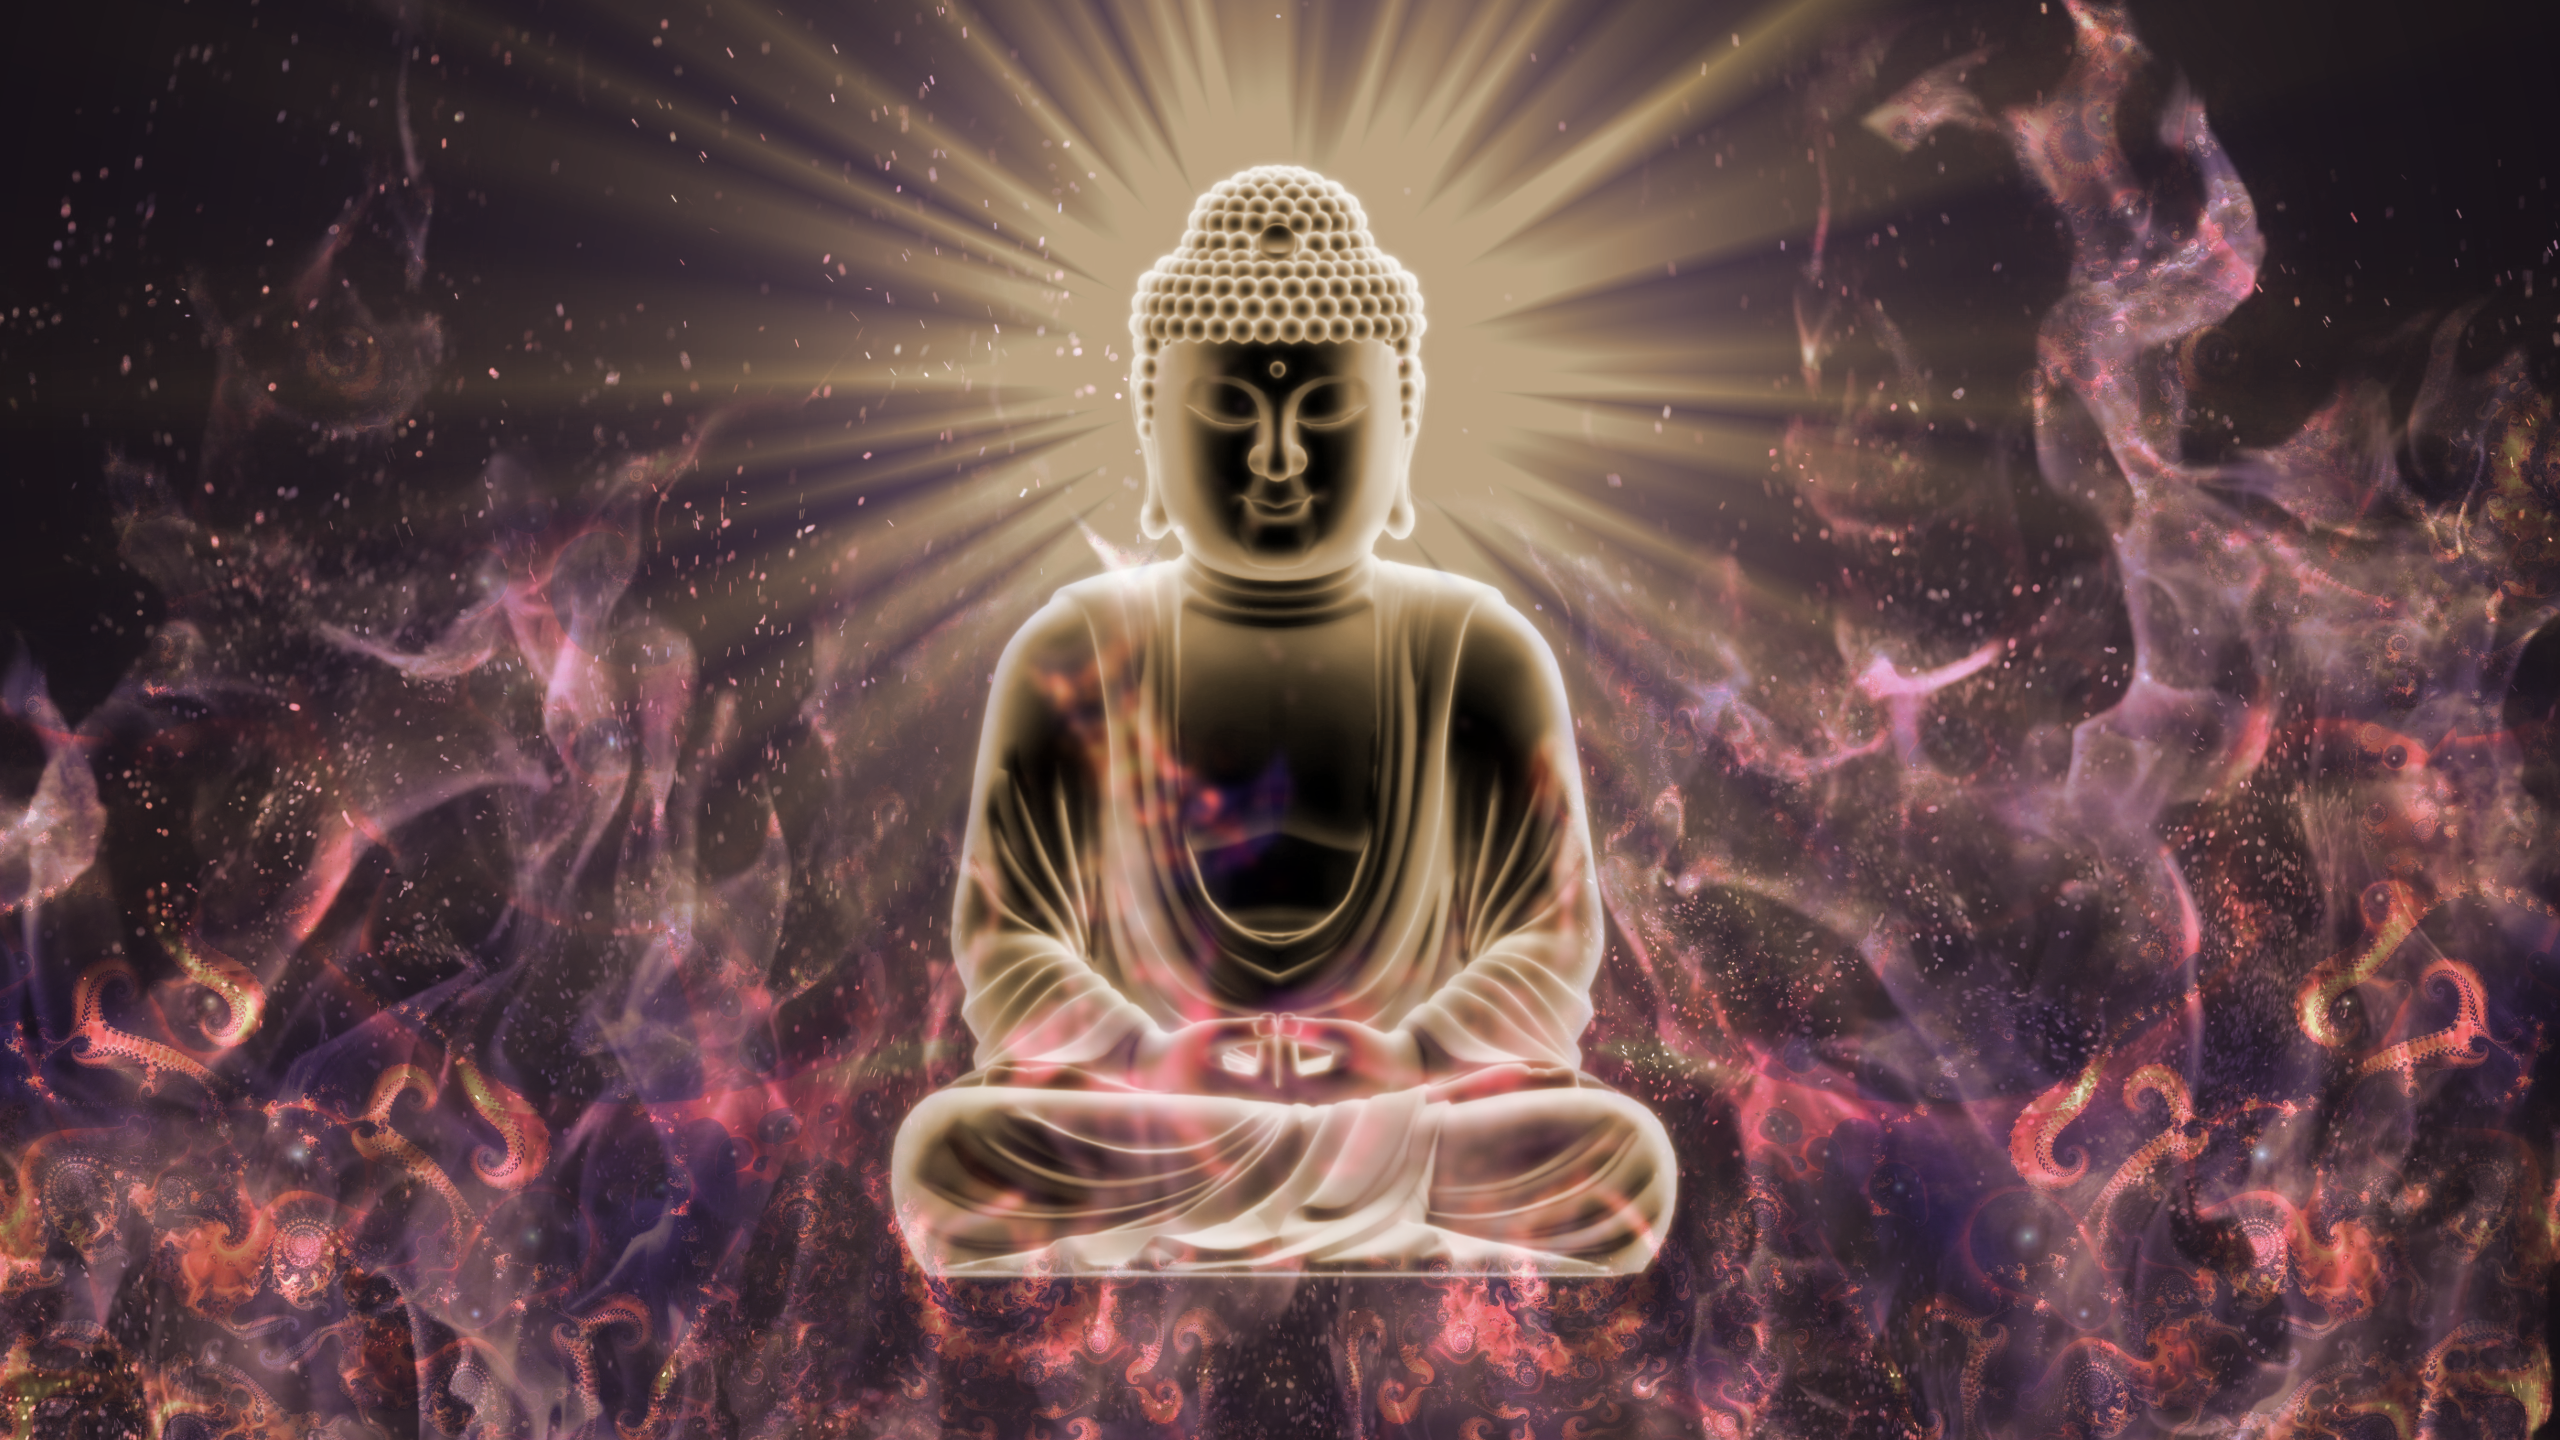 General 2560x1440 digital art Buddha Buddhism meditation glowing fire sitting blurred closed eyes fractal abstract